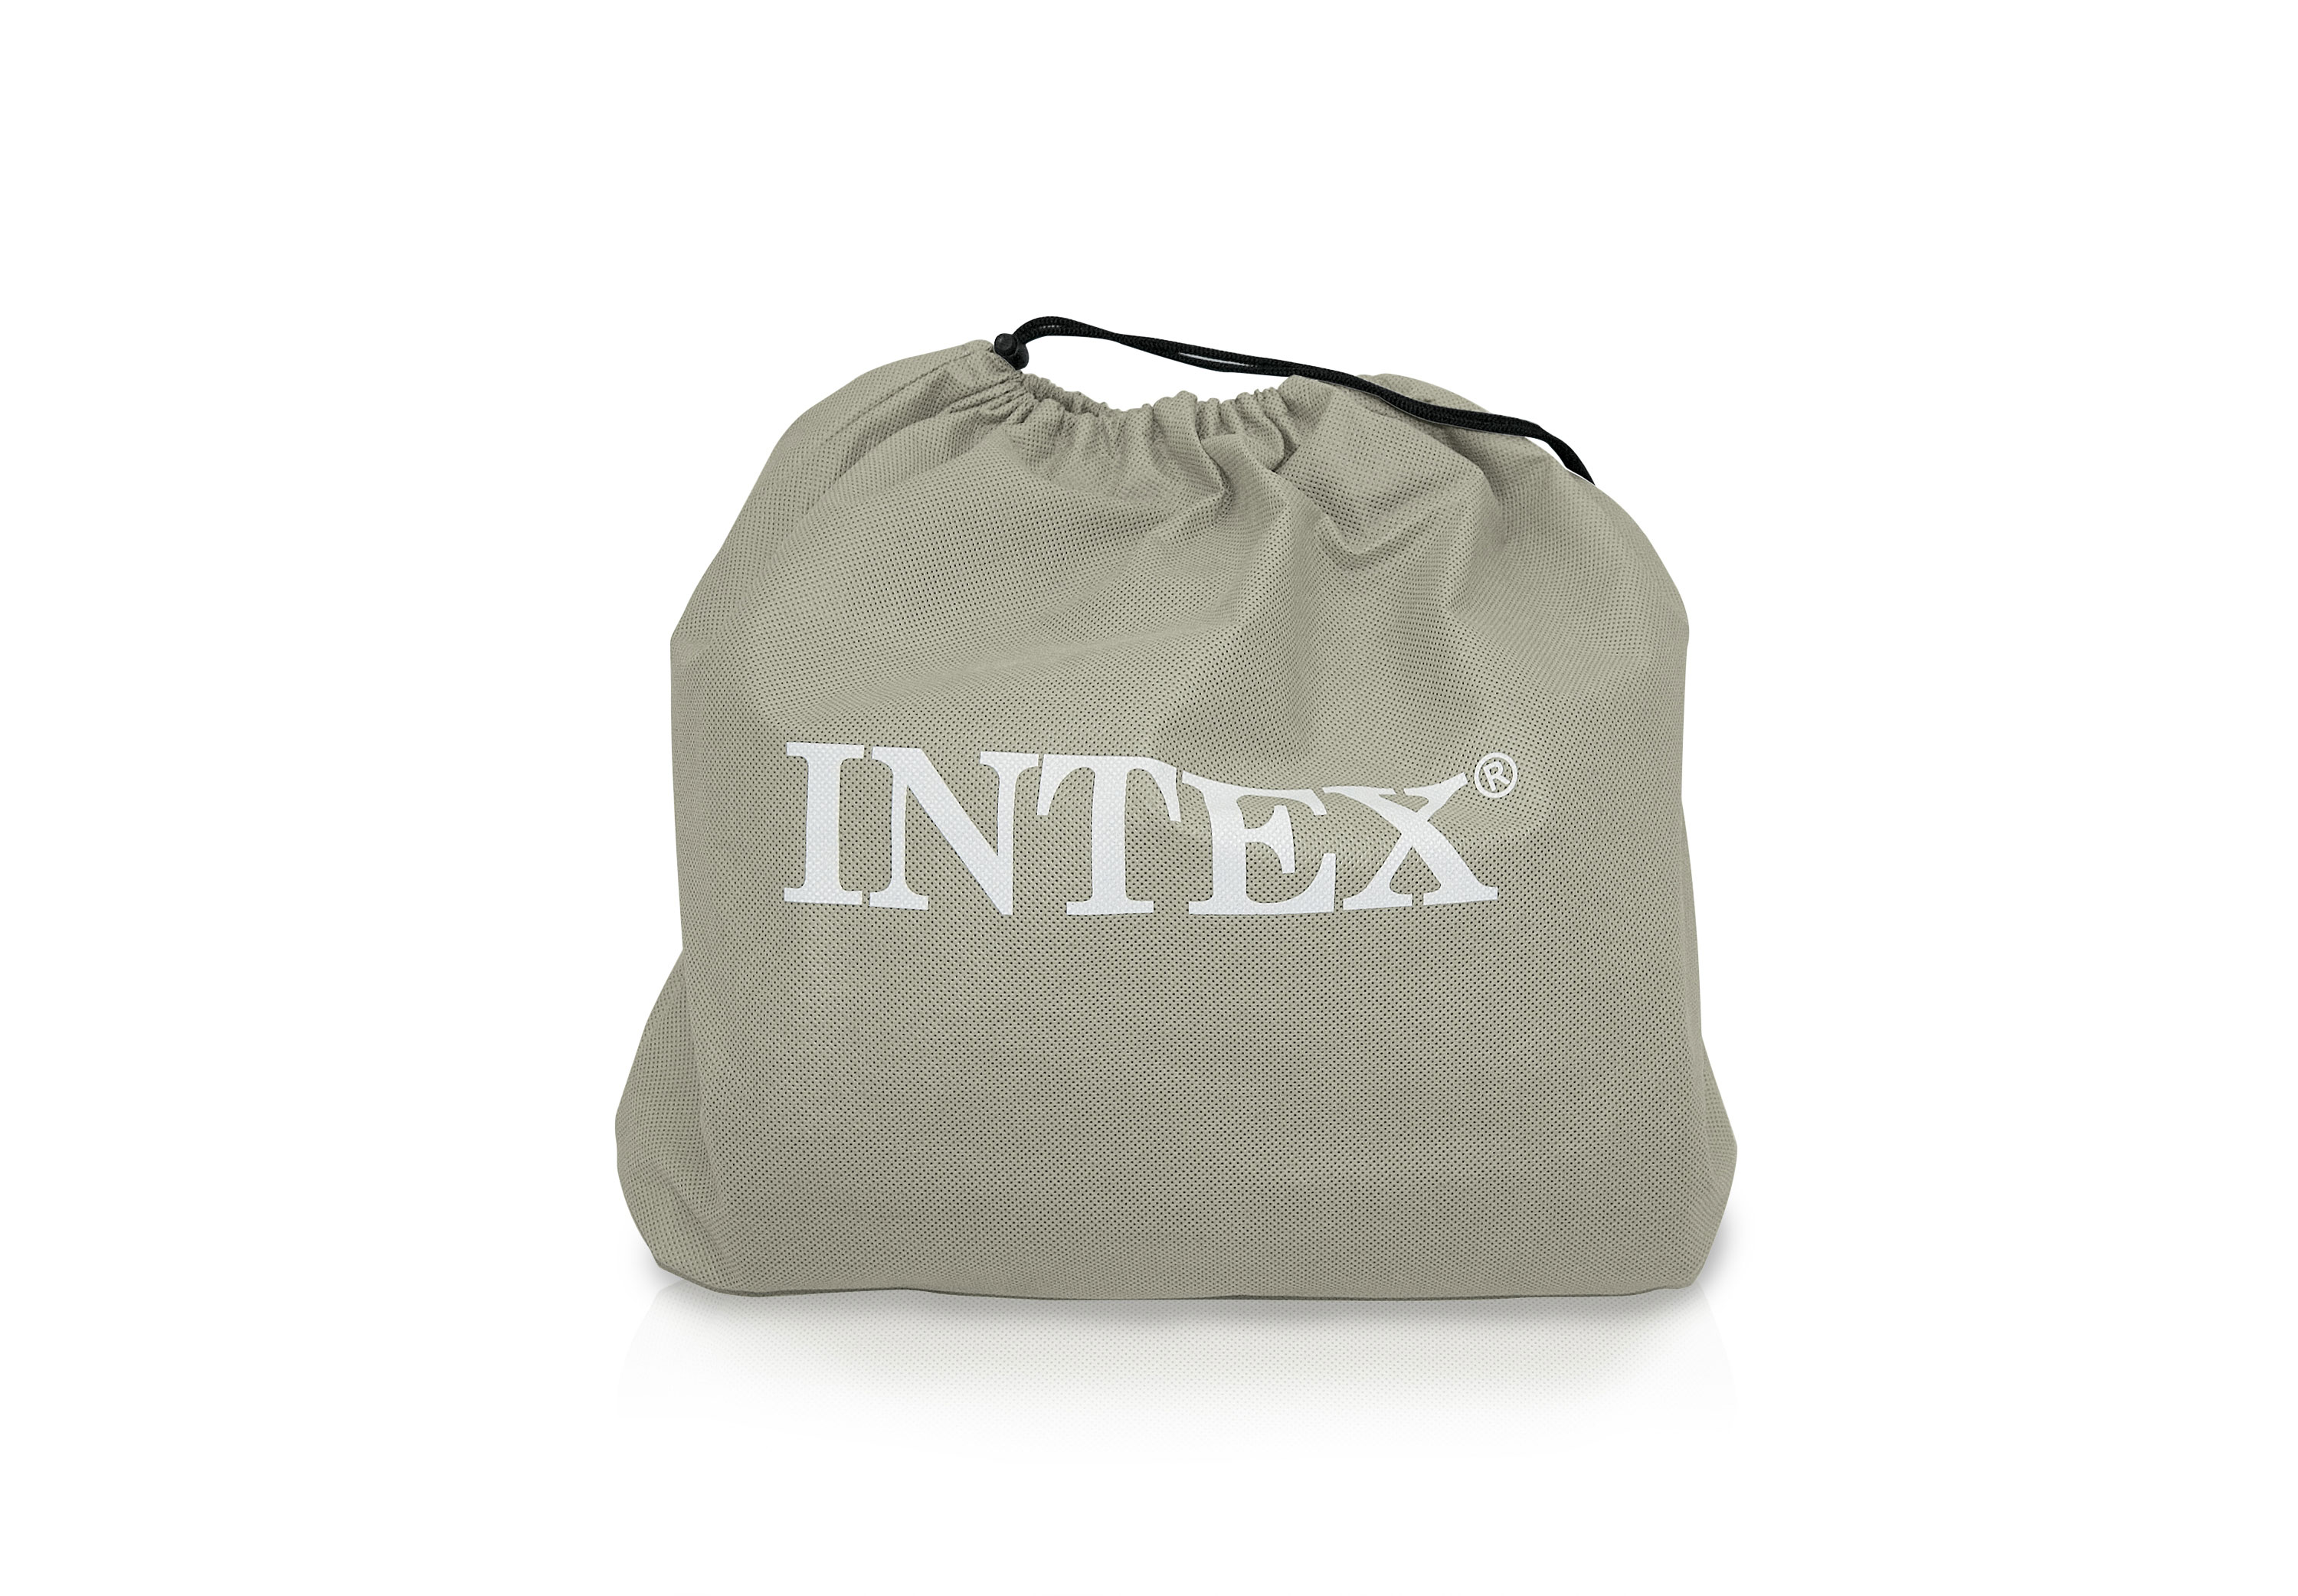 intex full air mattress 10 inch